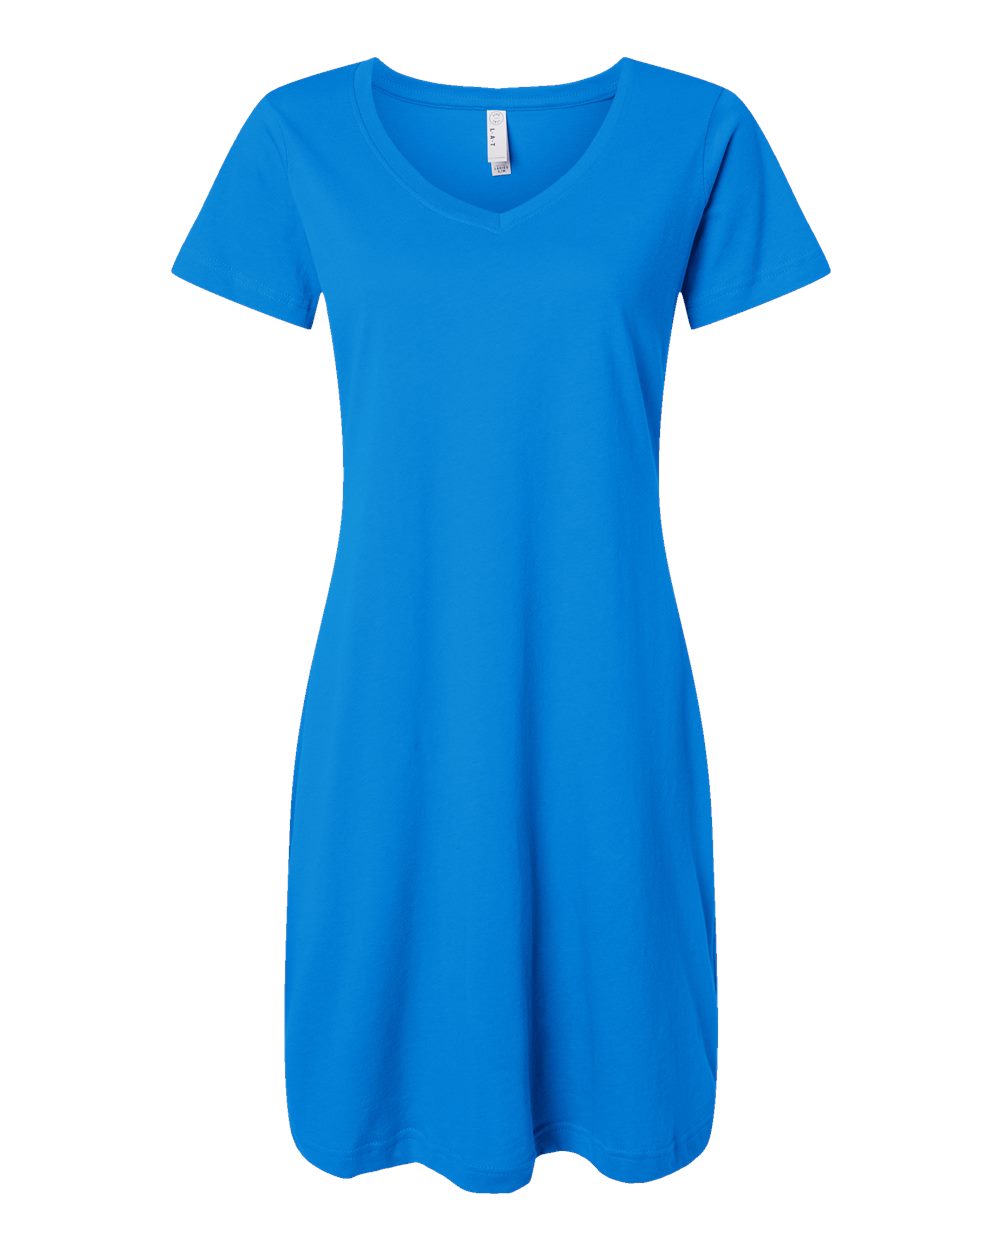 LAT - Women's Fine Jersey V-Neck Coverup - 3522 - Cobalt - Size: L/XL - image 1 of 5